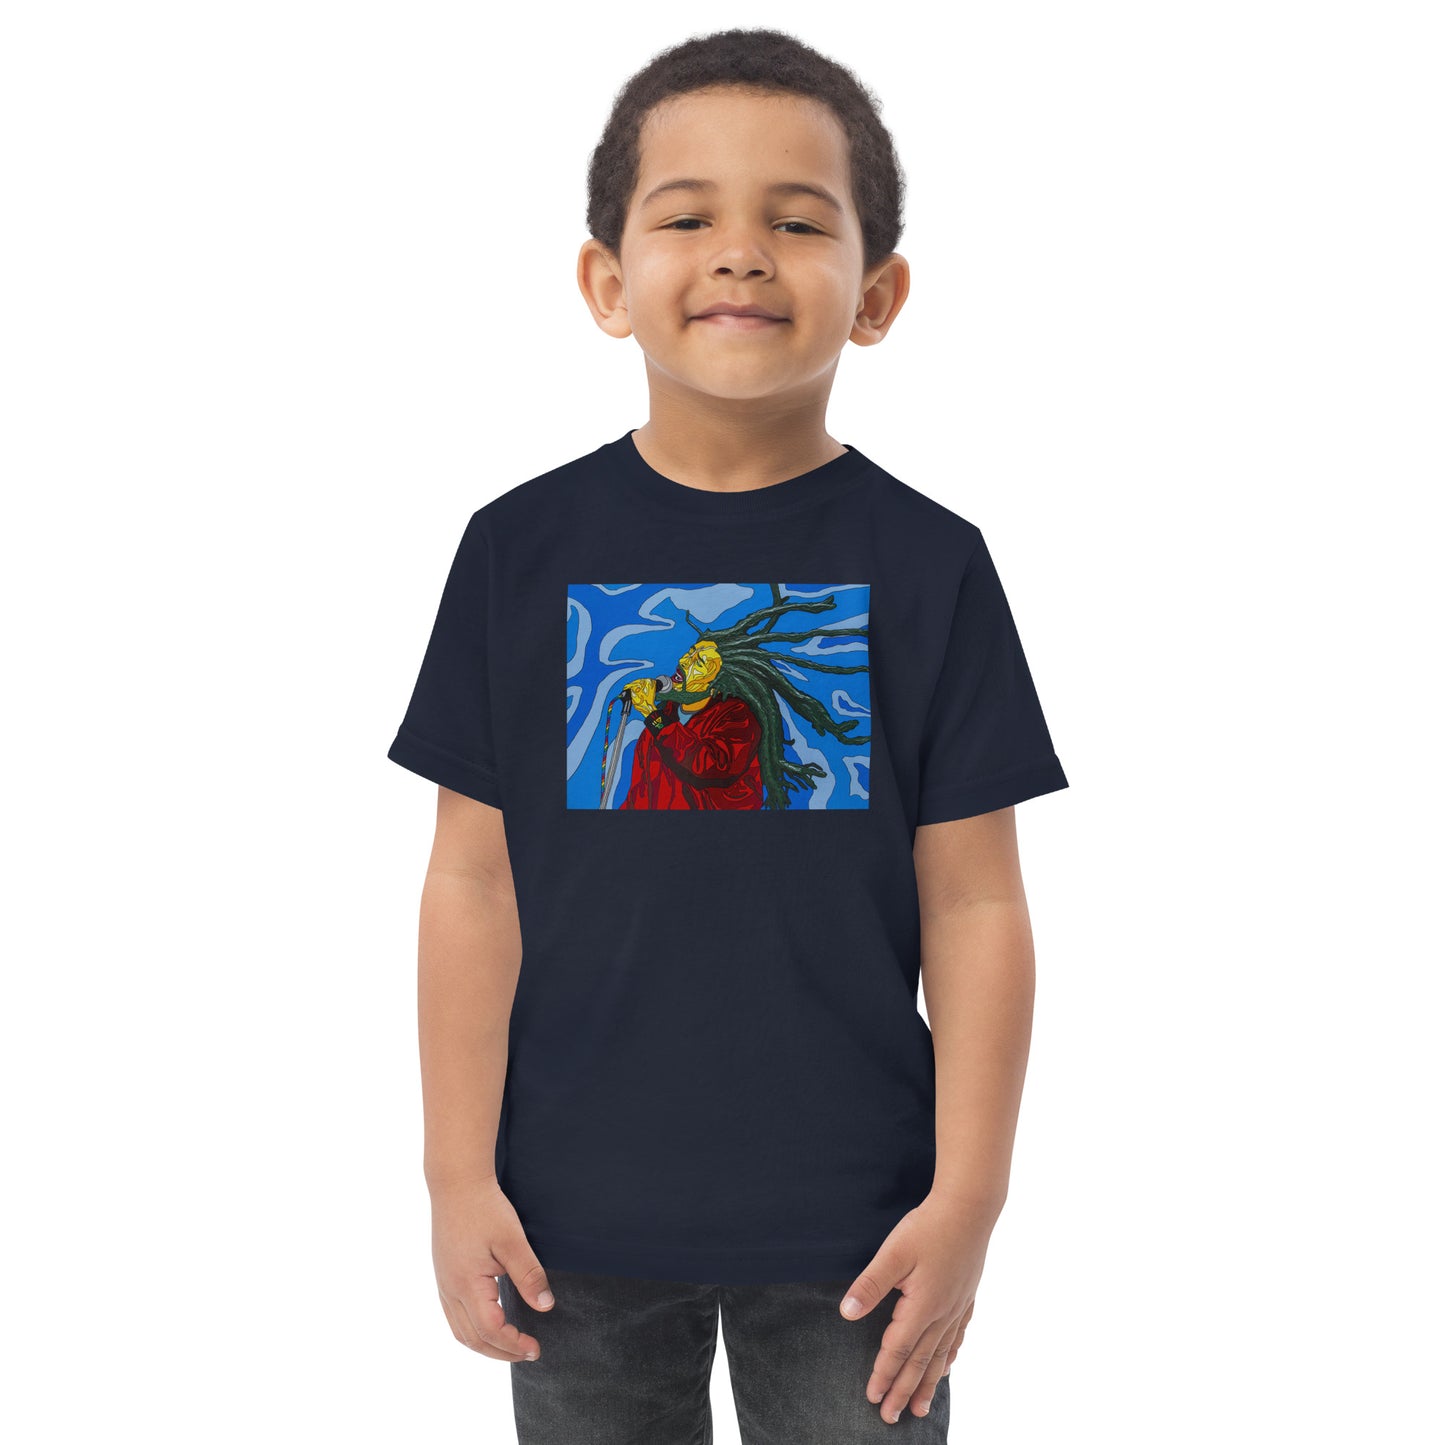 One Love - Toddler jersey t-shirt